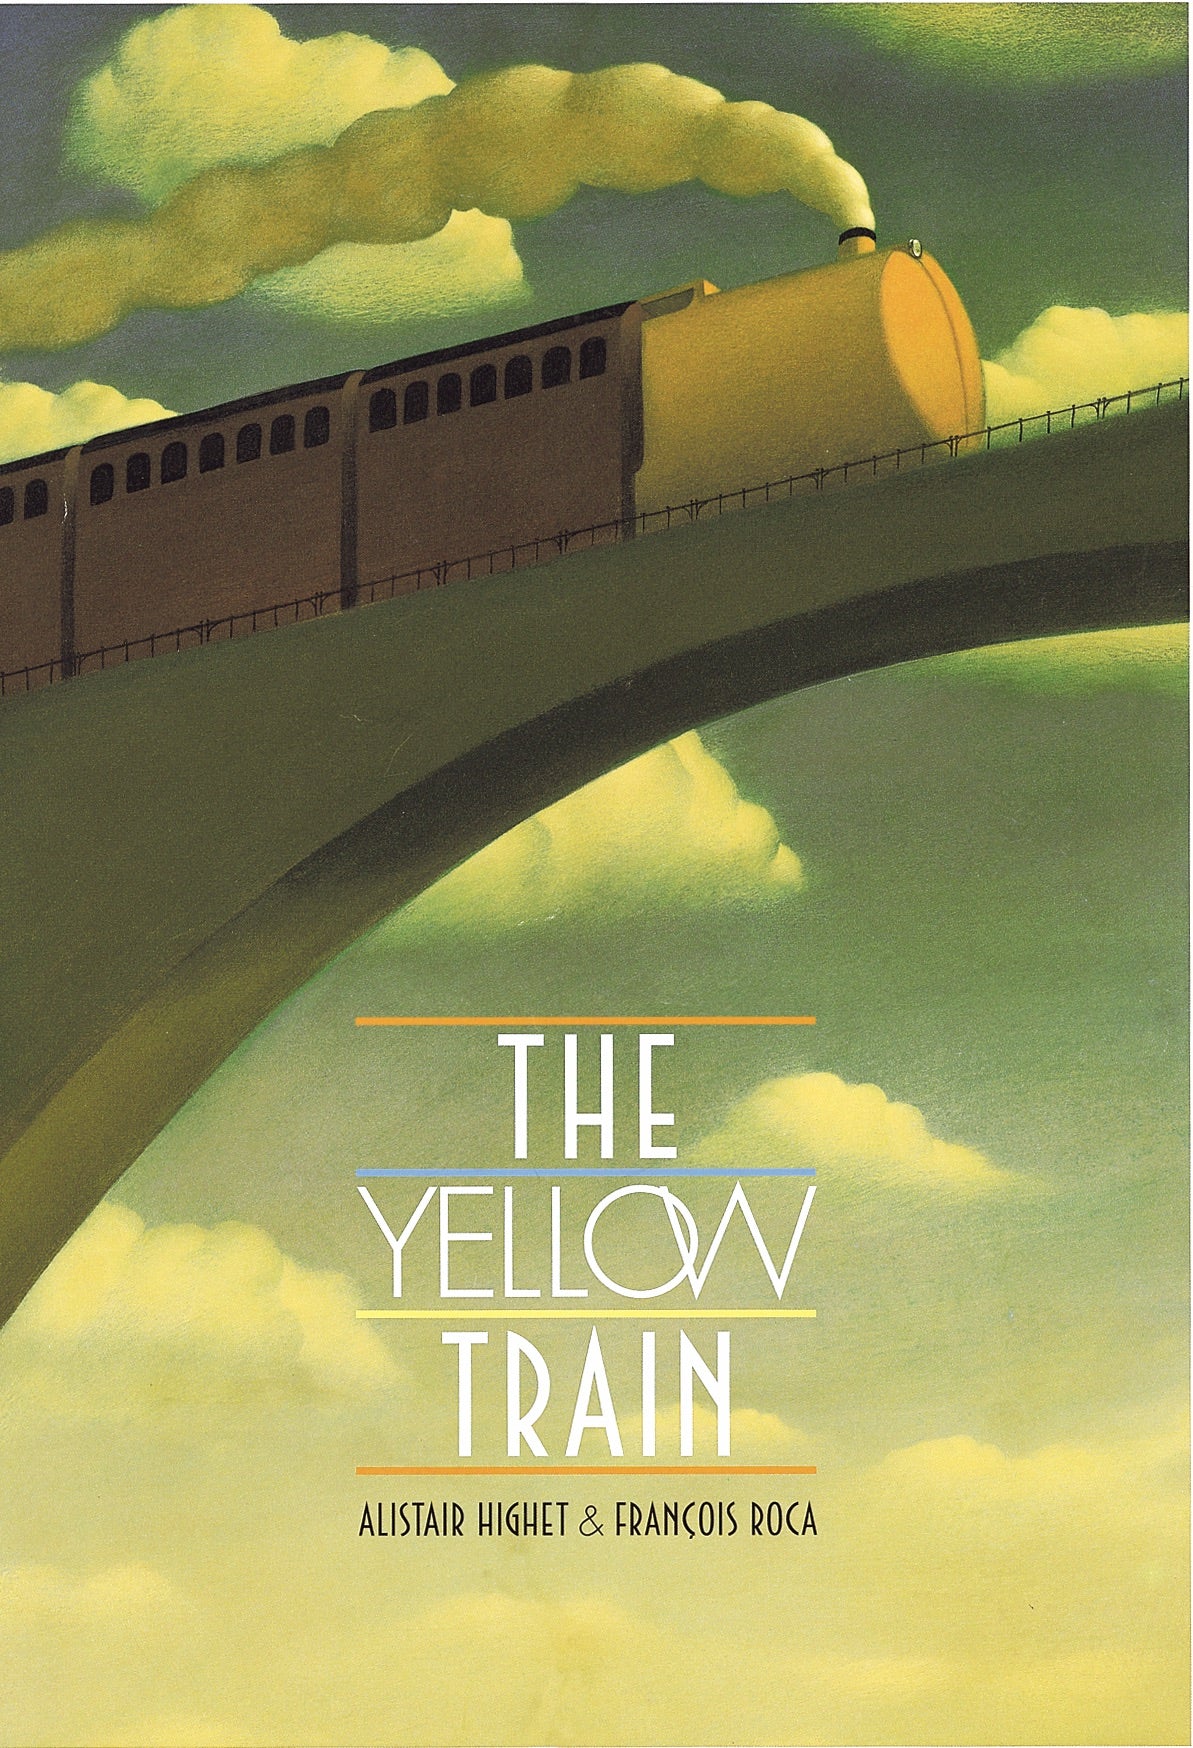 The Yellow Train